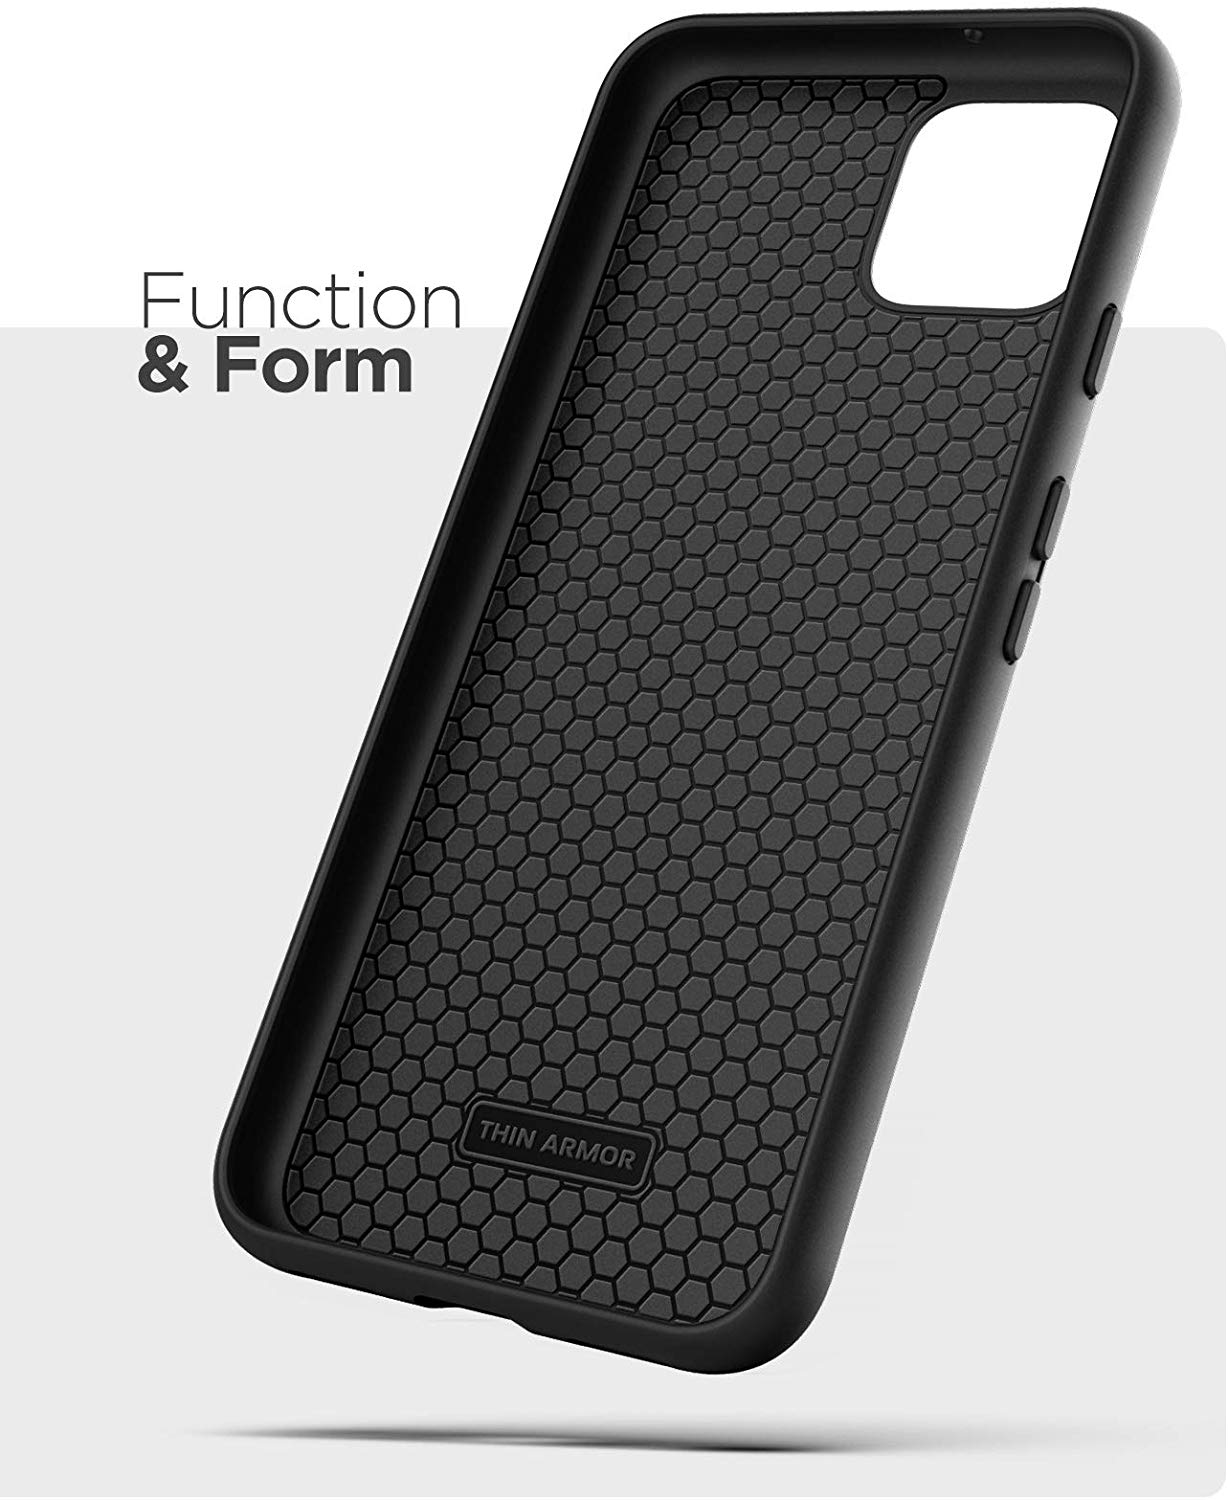 Encased Pixel 4 Case (Thin Armor) Slim Fit Flexible Grip Phone Cover for Google Pixel 4 - Black - image 3 of 6